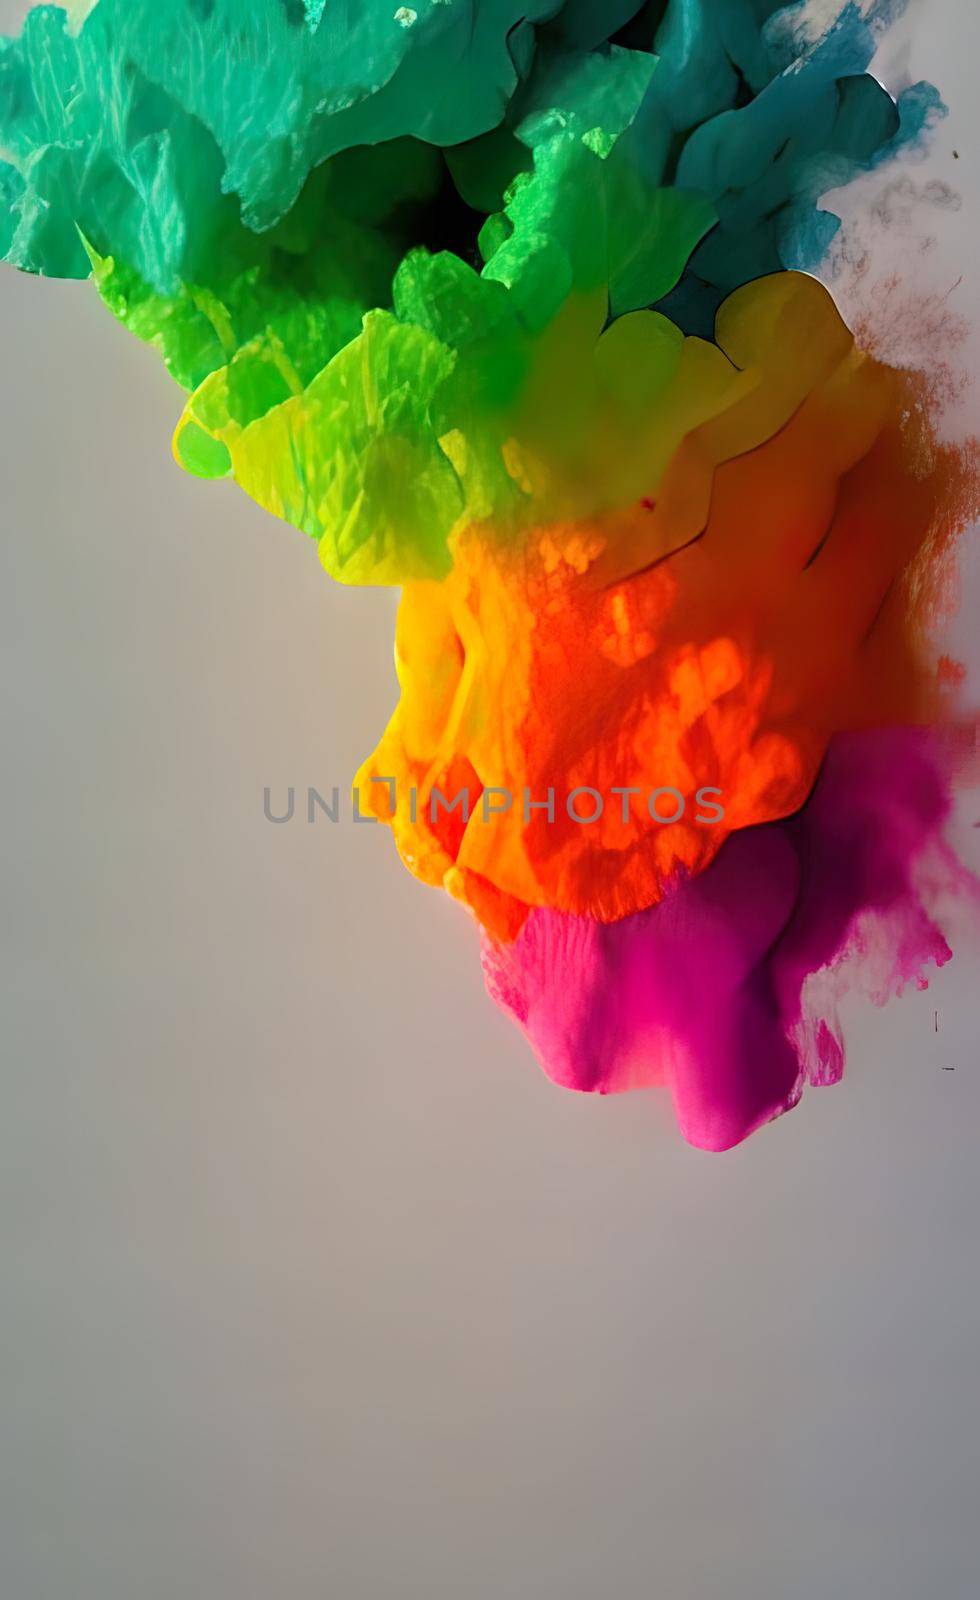 abstract powder paint background with splashes by yilmazsavaskandag